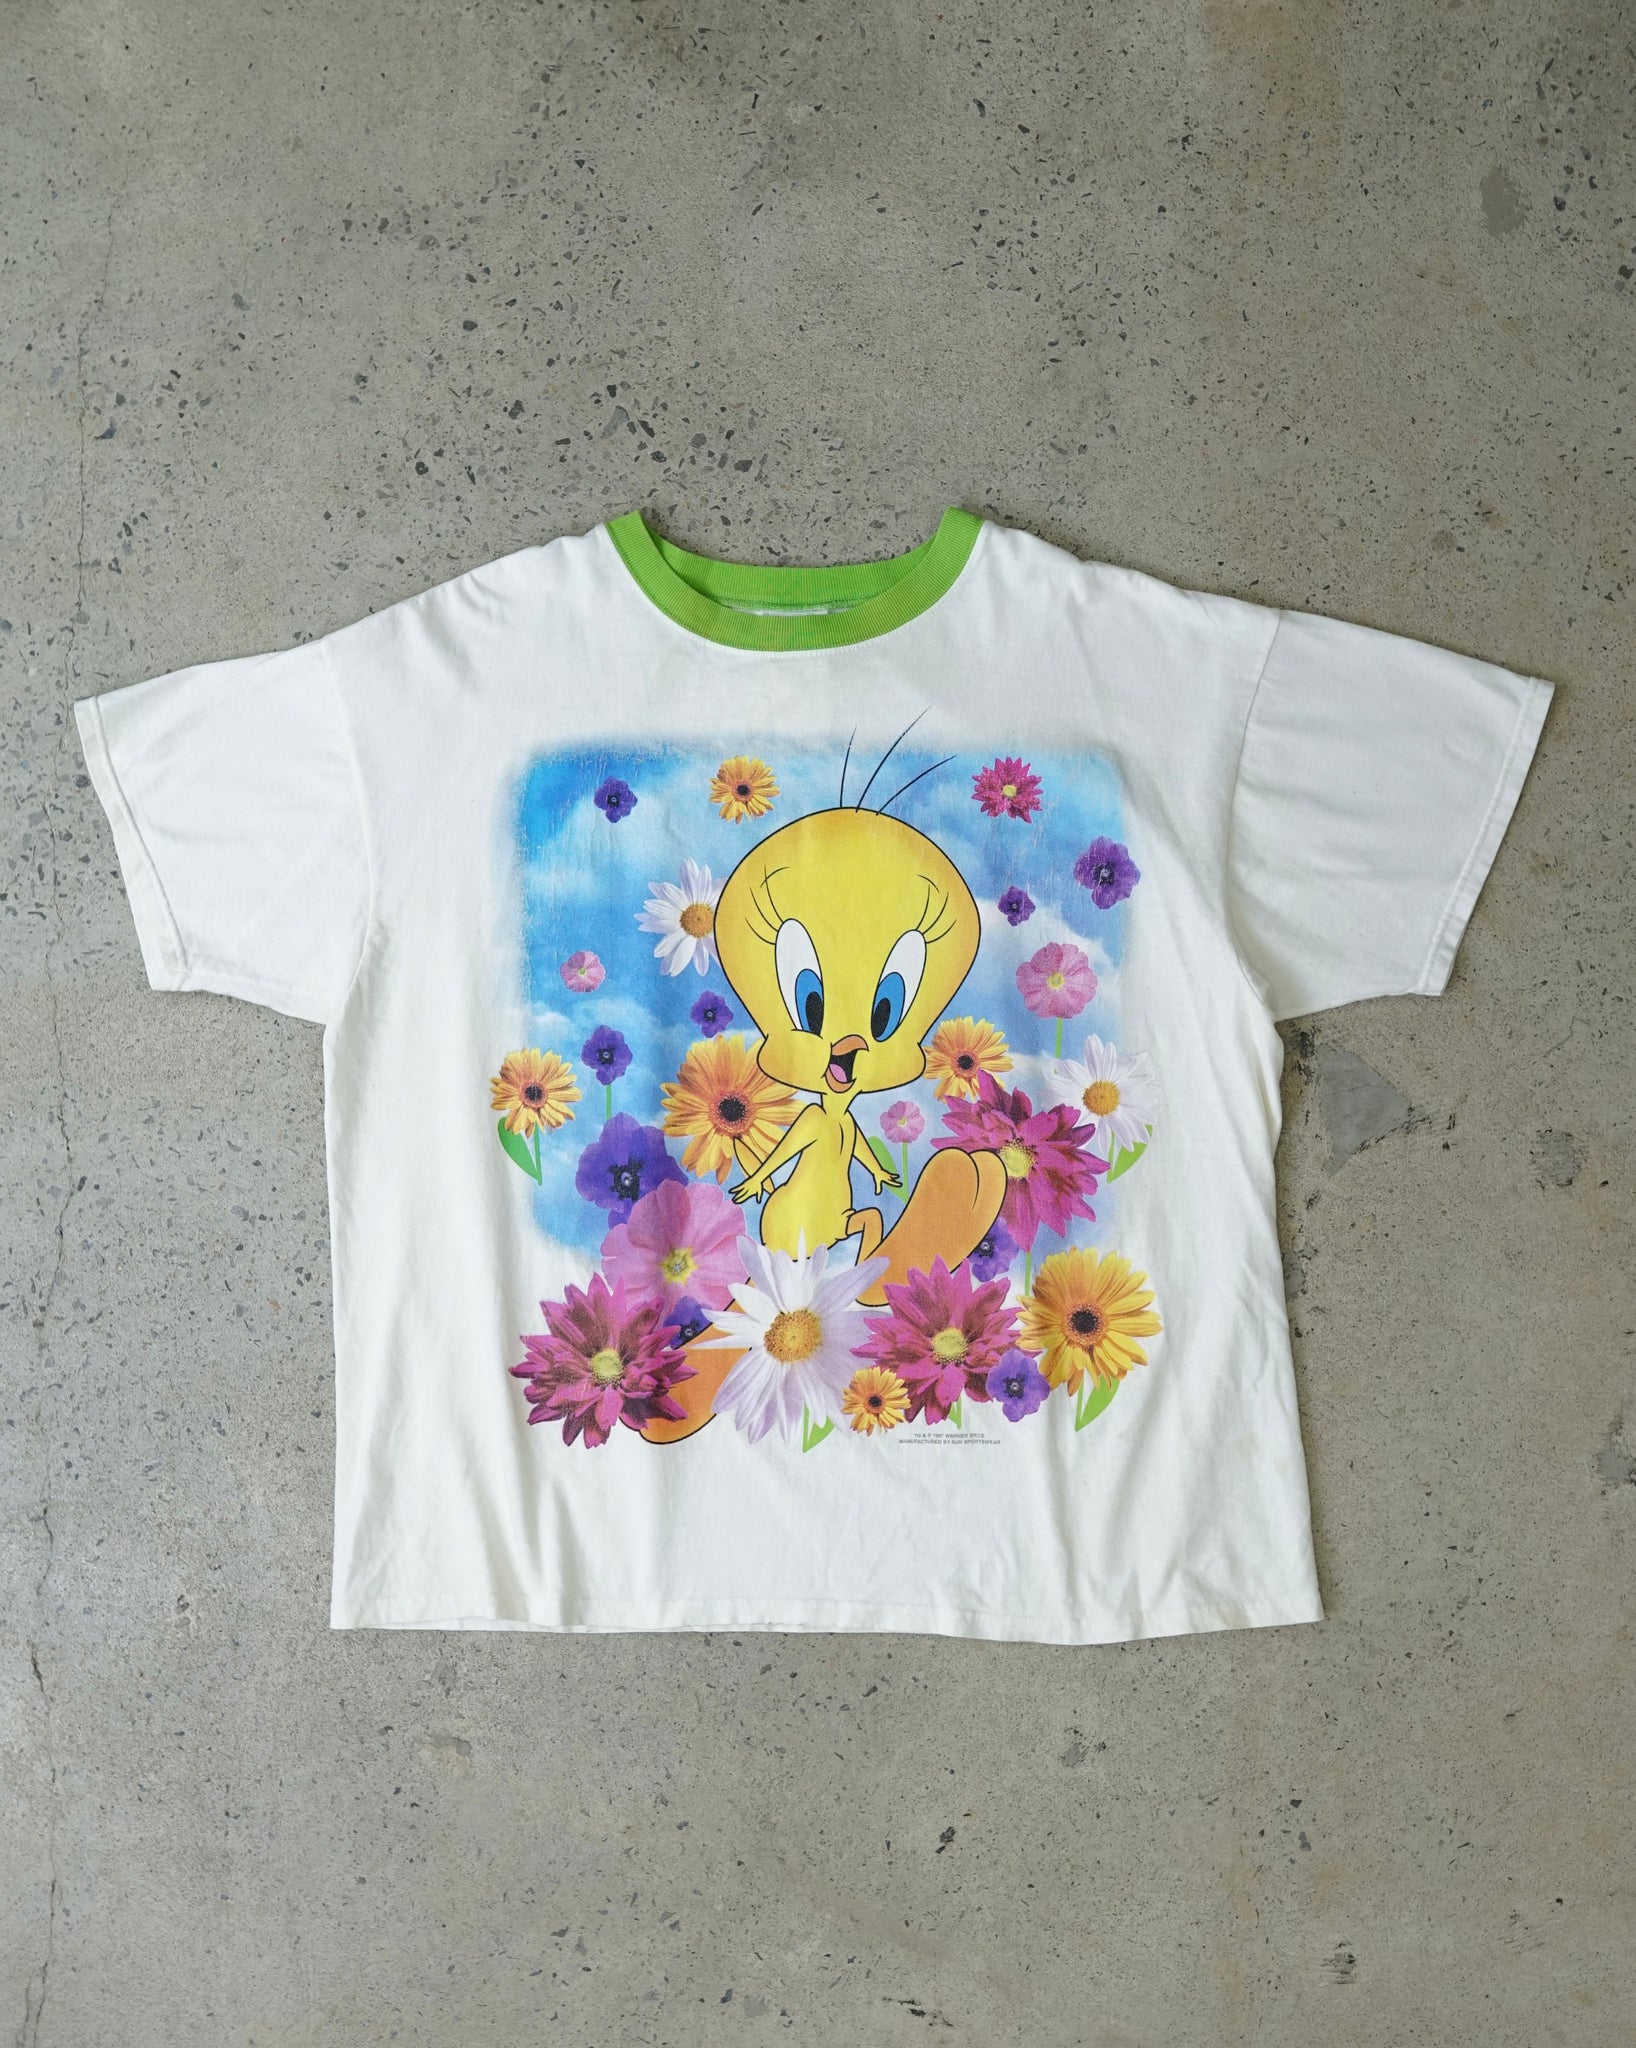 tweety bird t-shirt